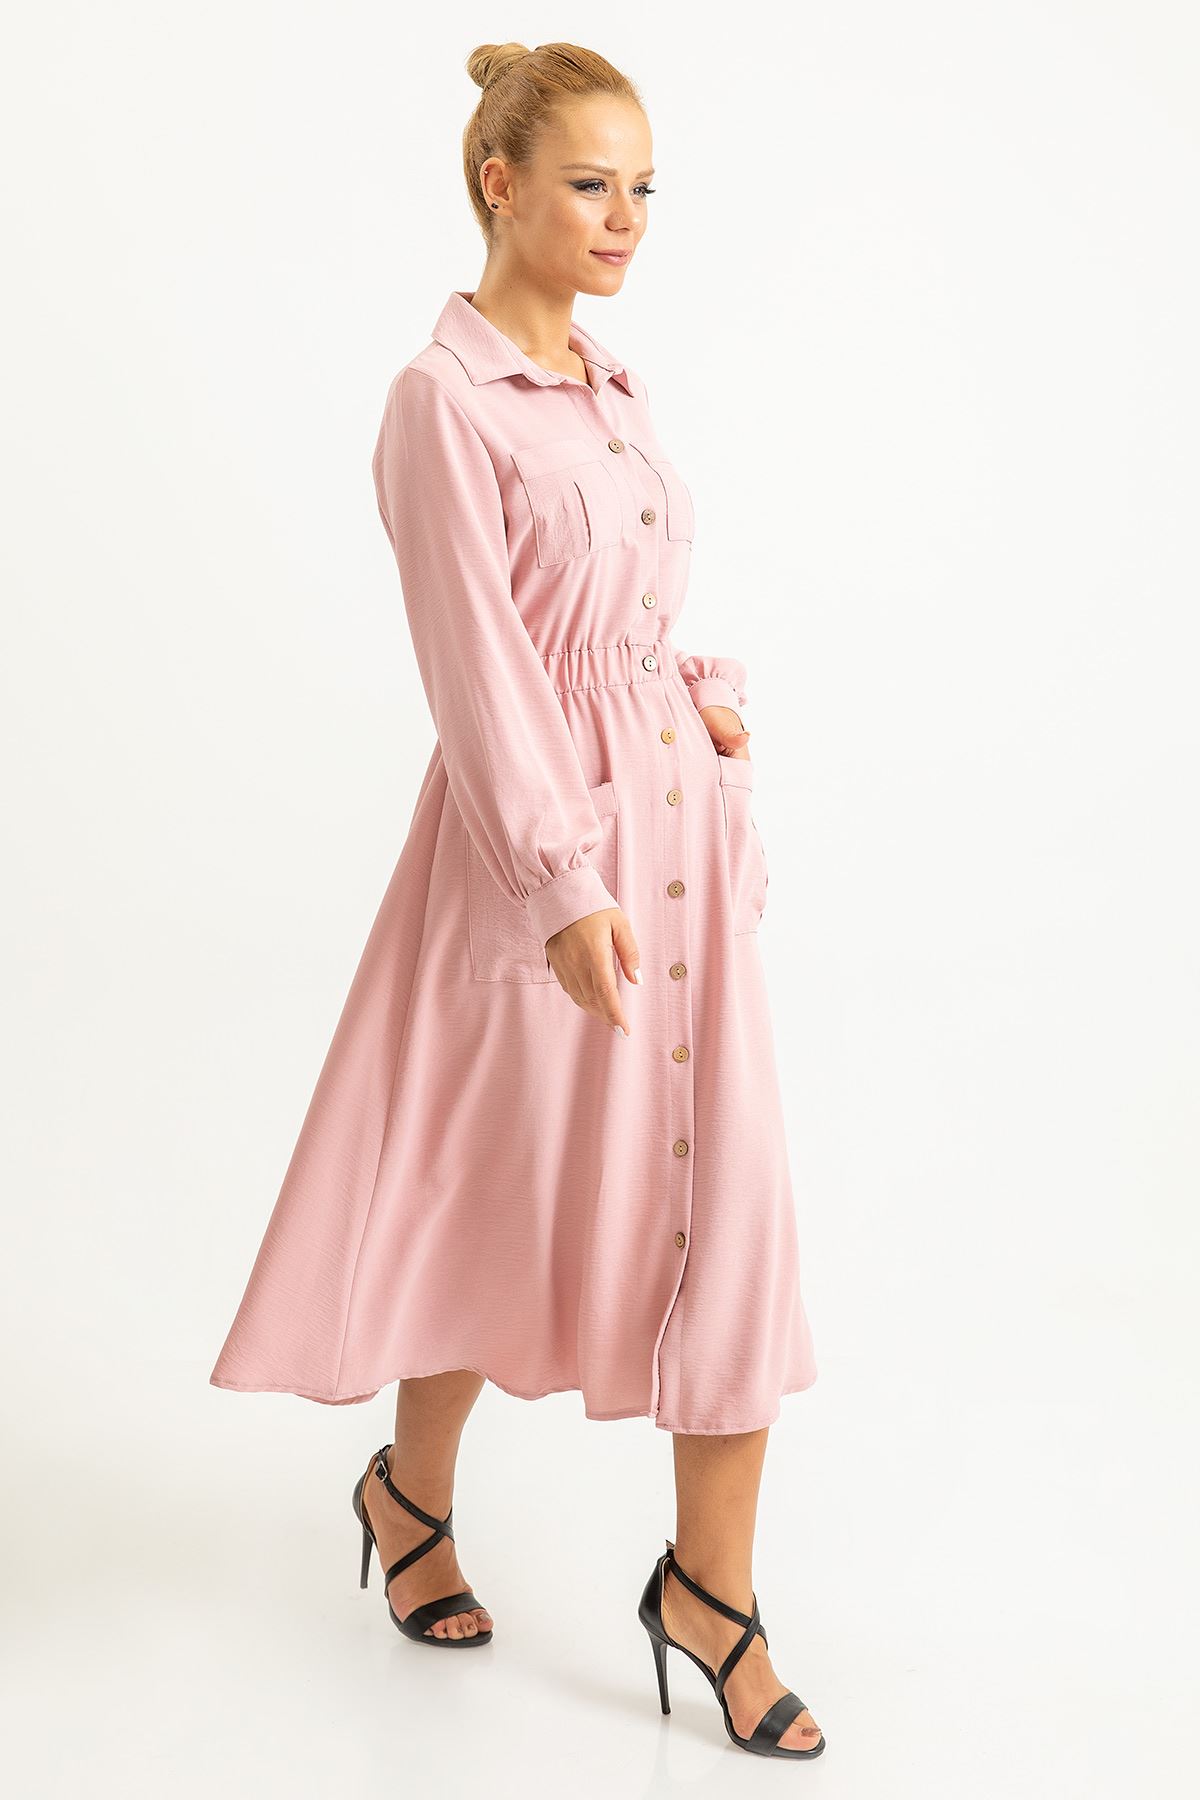 Aerobin Fabric Shirt Collar Knee Lenght Elastic Women Dress - Light Pink